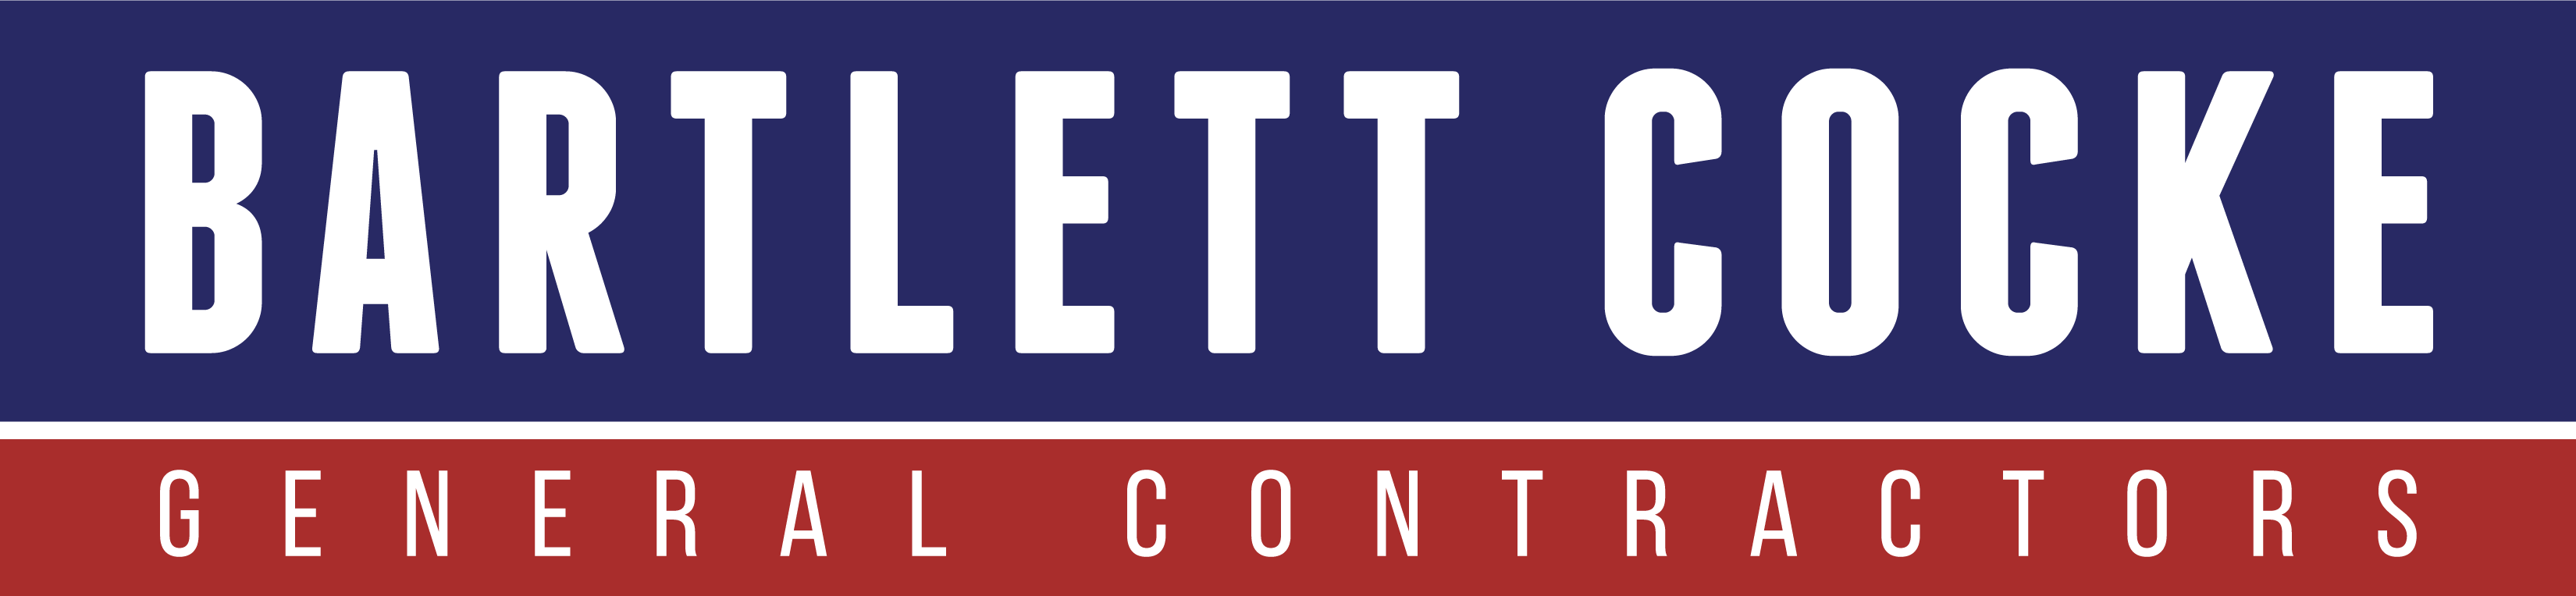 Bartlett Cocke logo